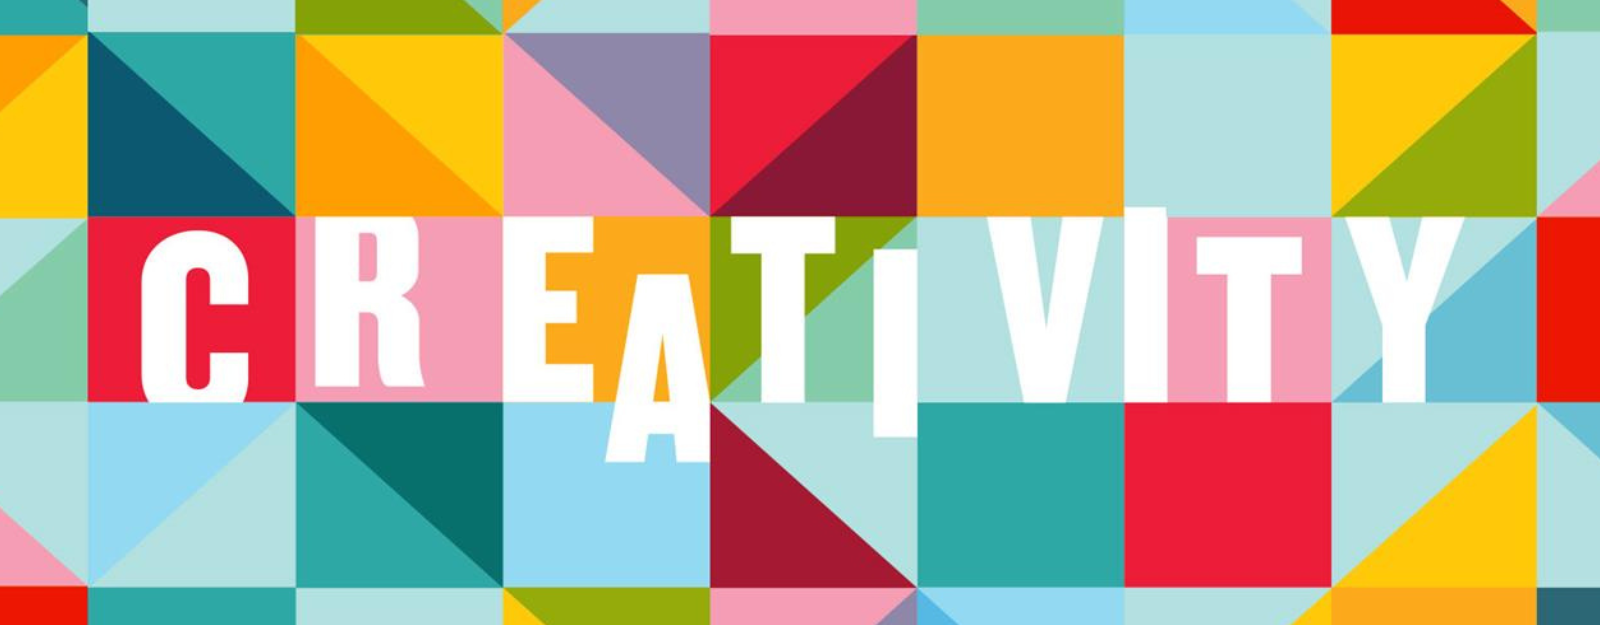 Creativity Festival banner